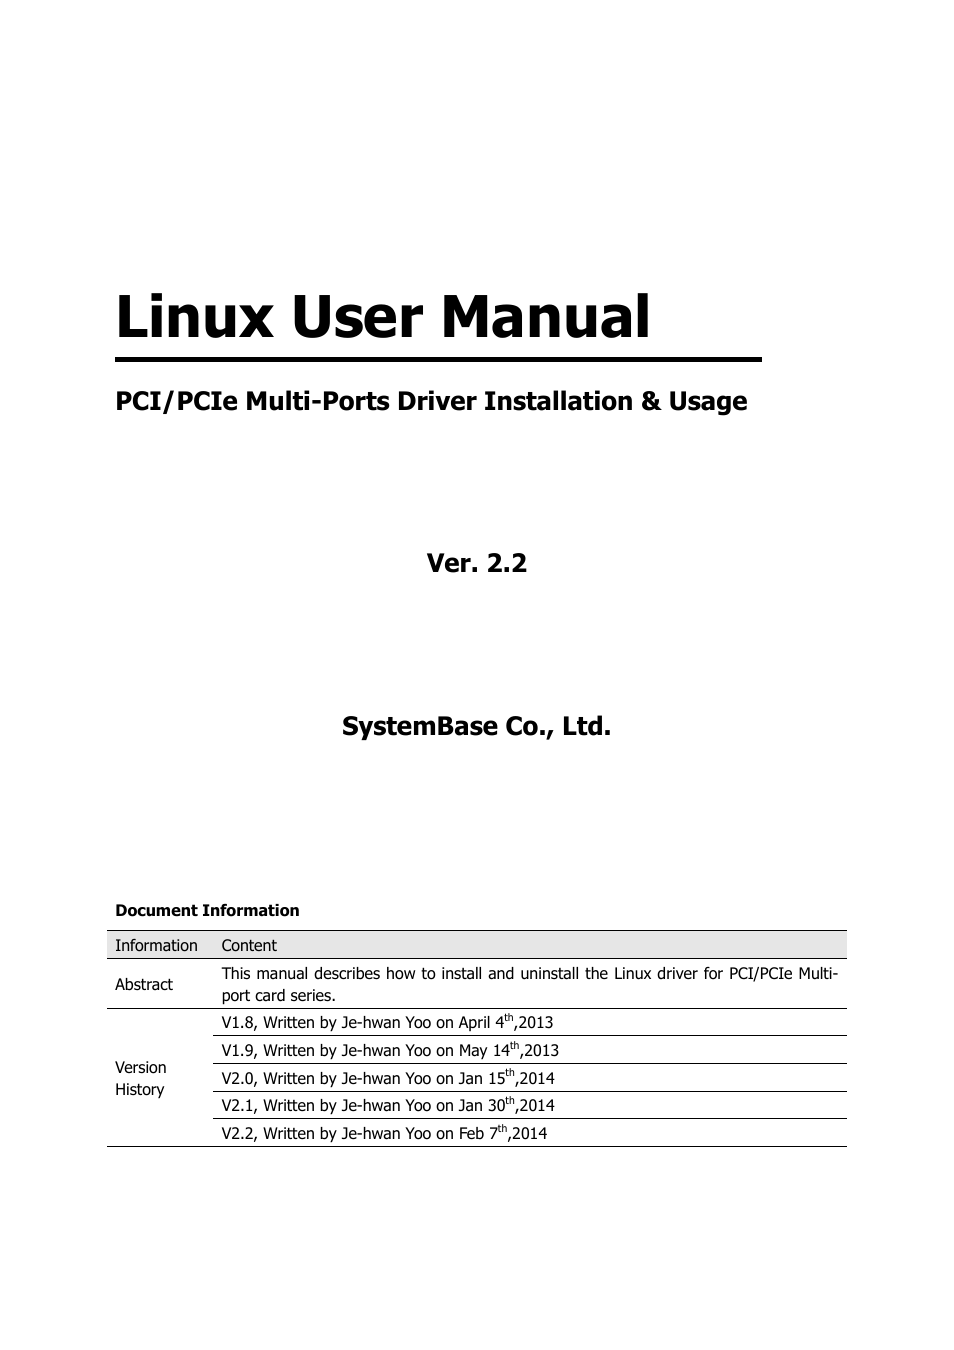 PCI Serial Multi-port Card Linux Driver